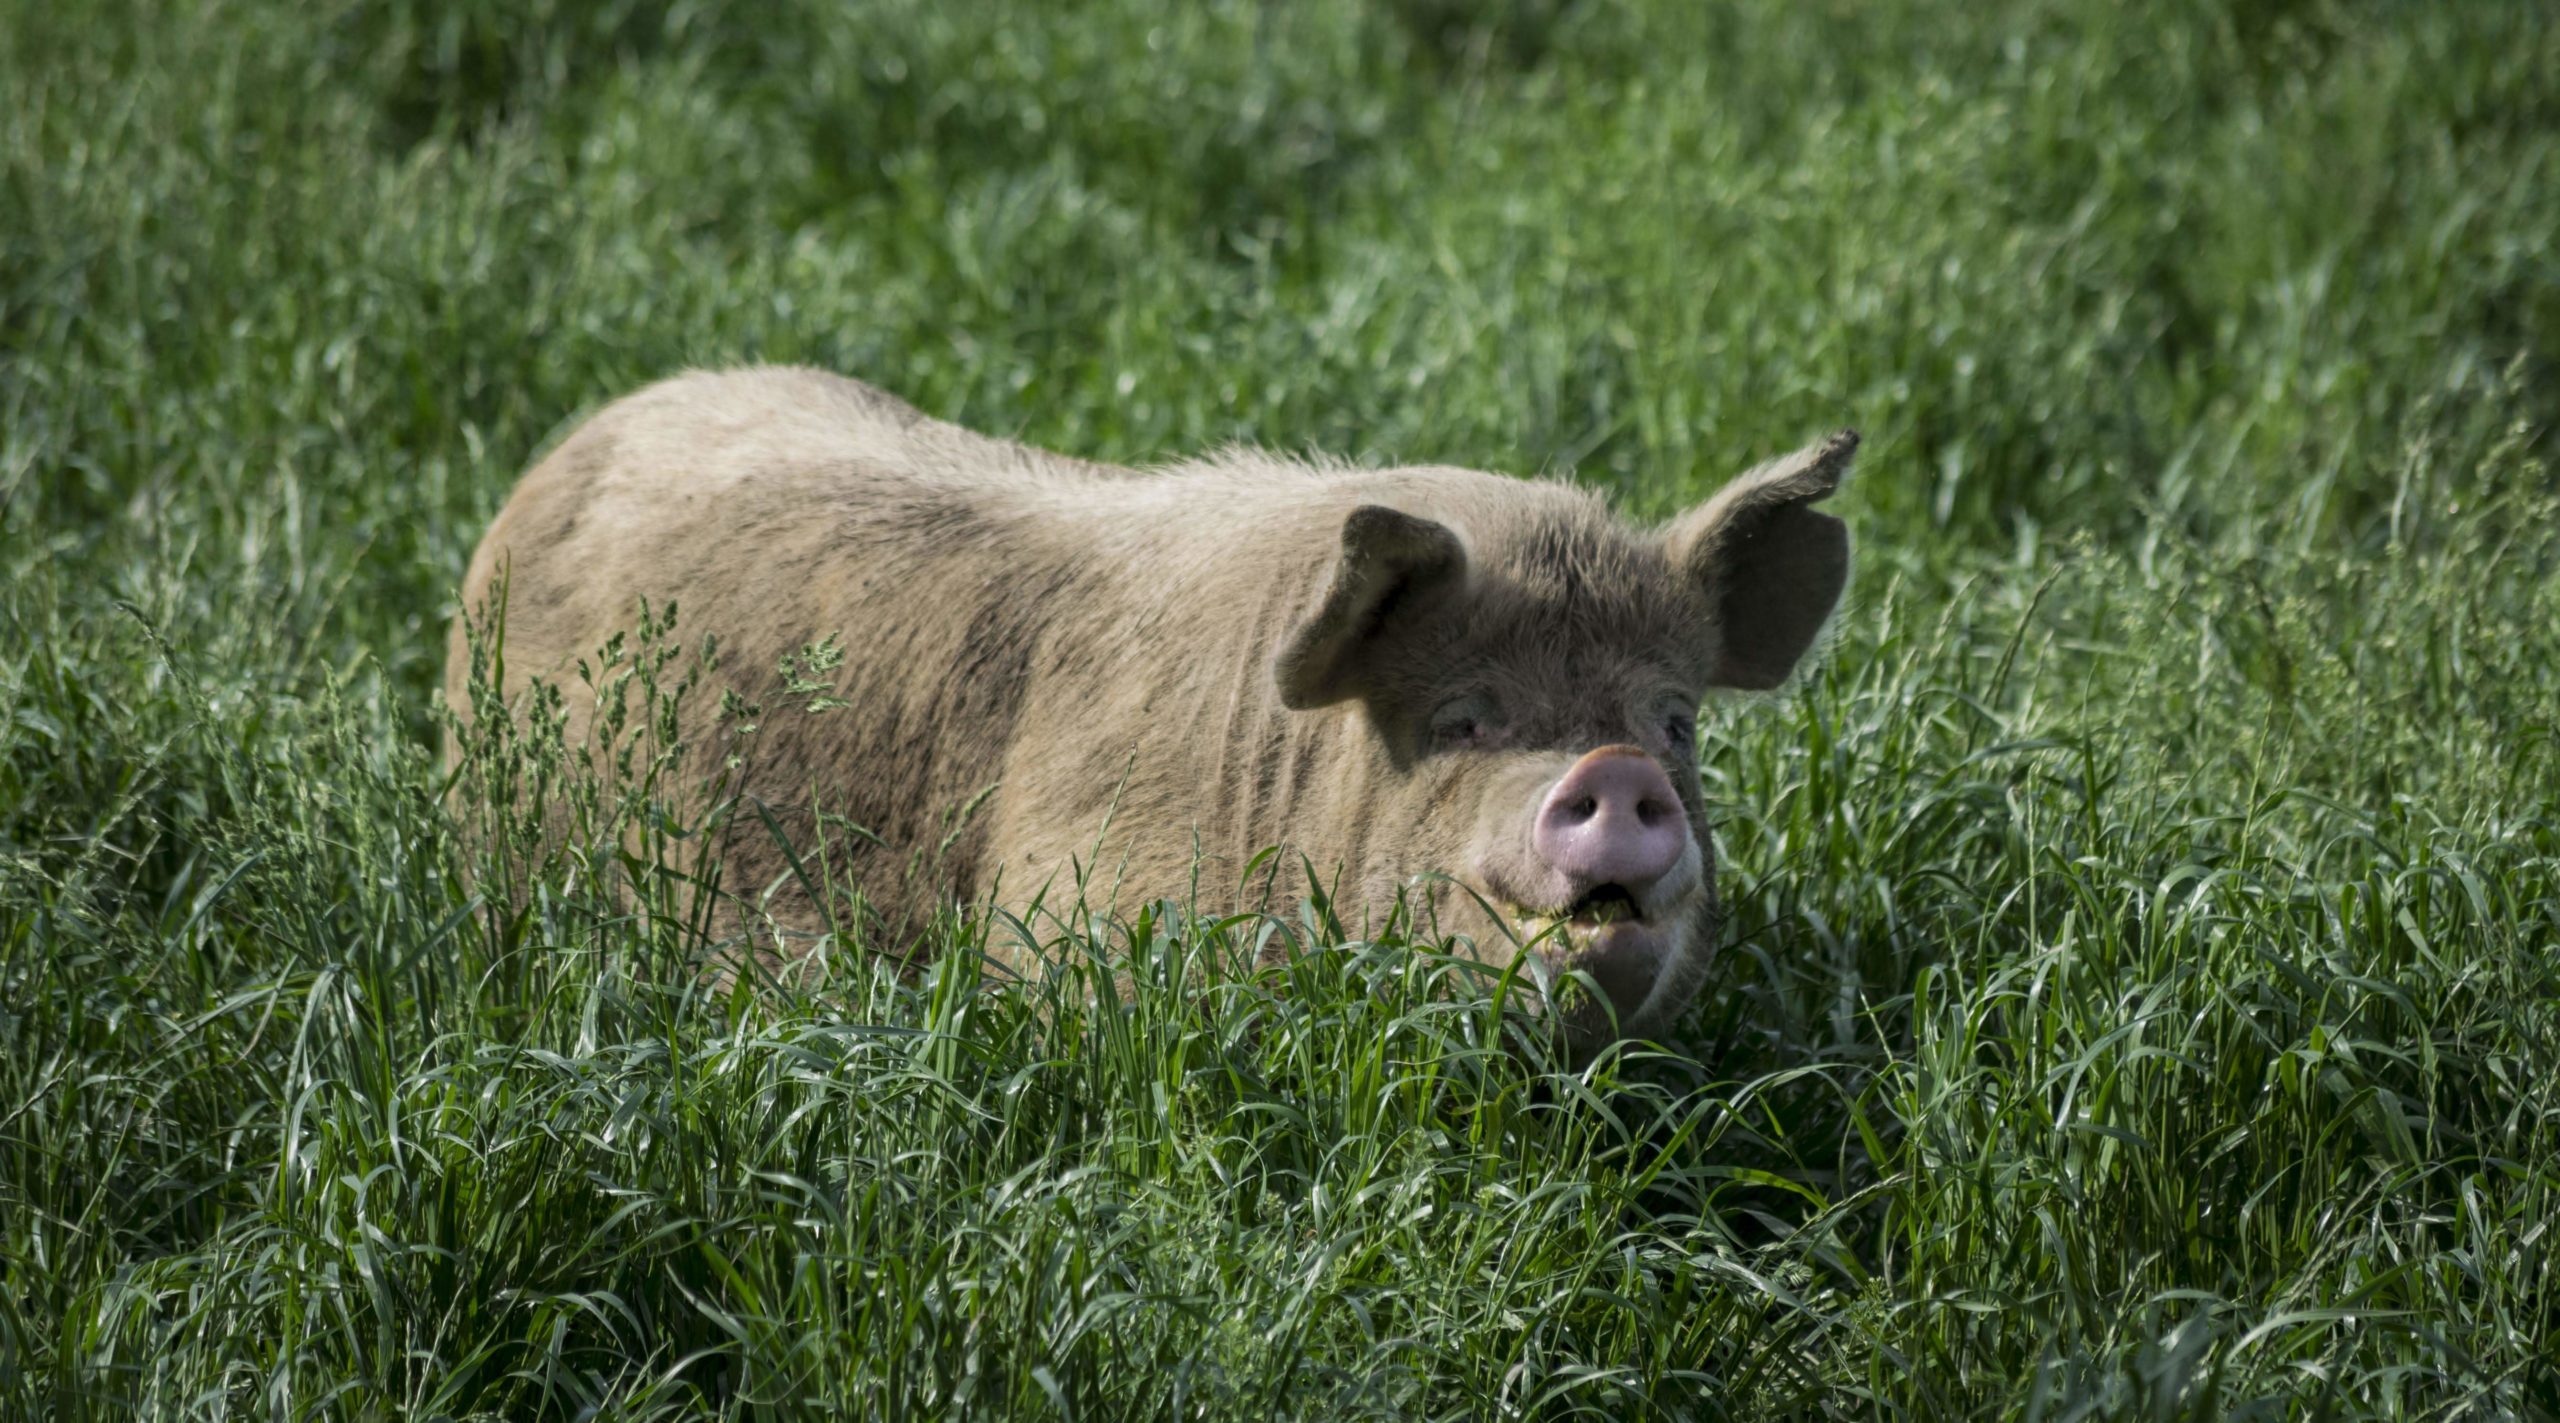 A Hunt hog wading through the pasture.